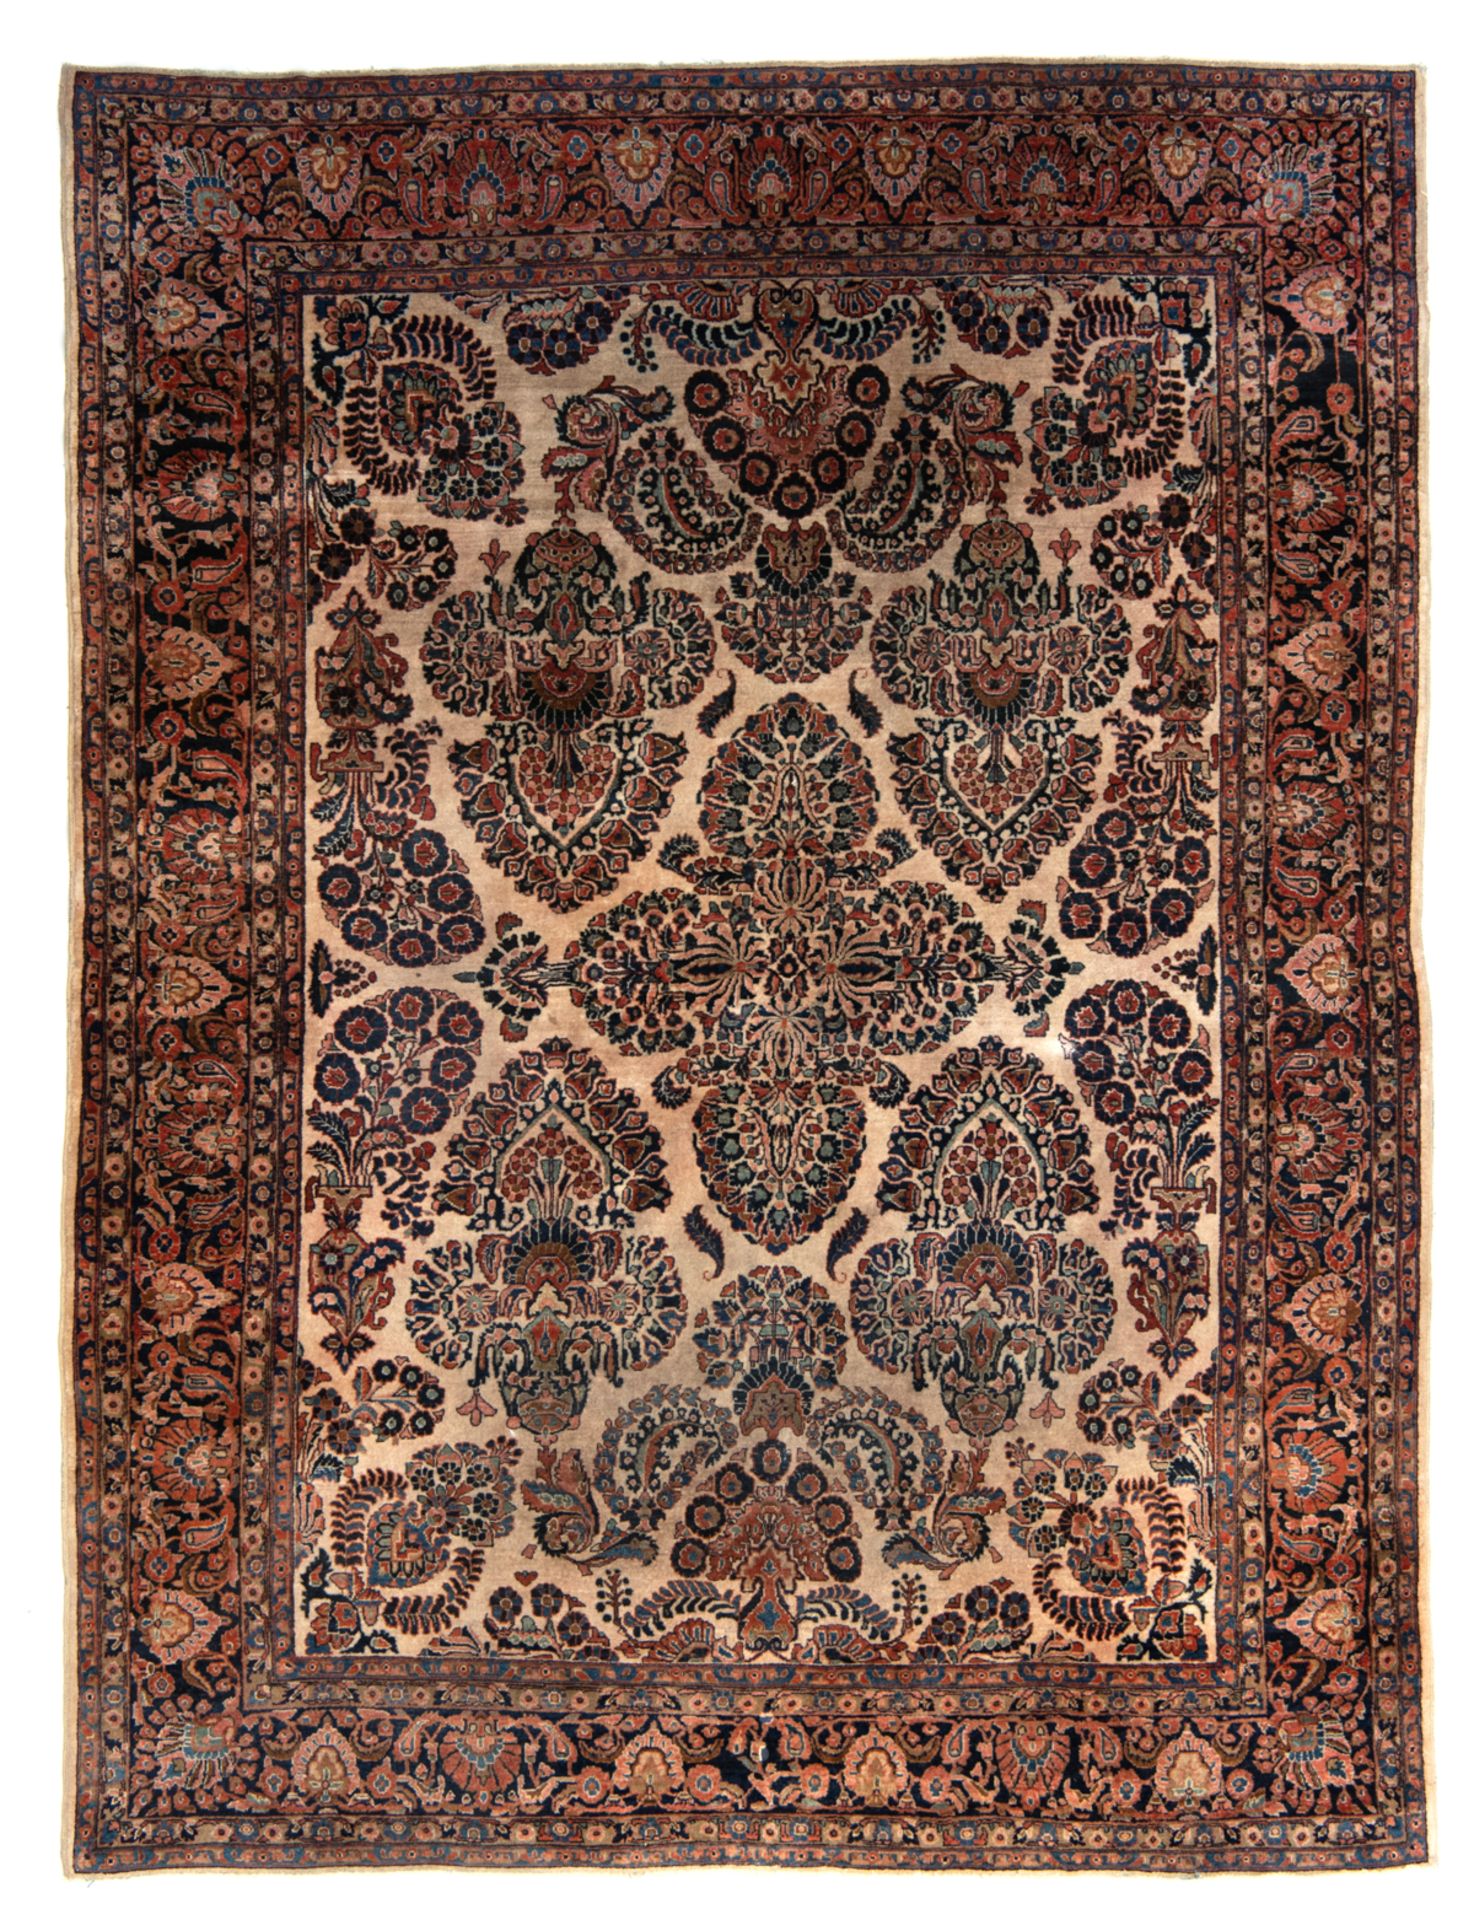 A large Oriental rug, 266 x 351,5 cm